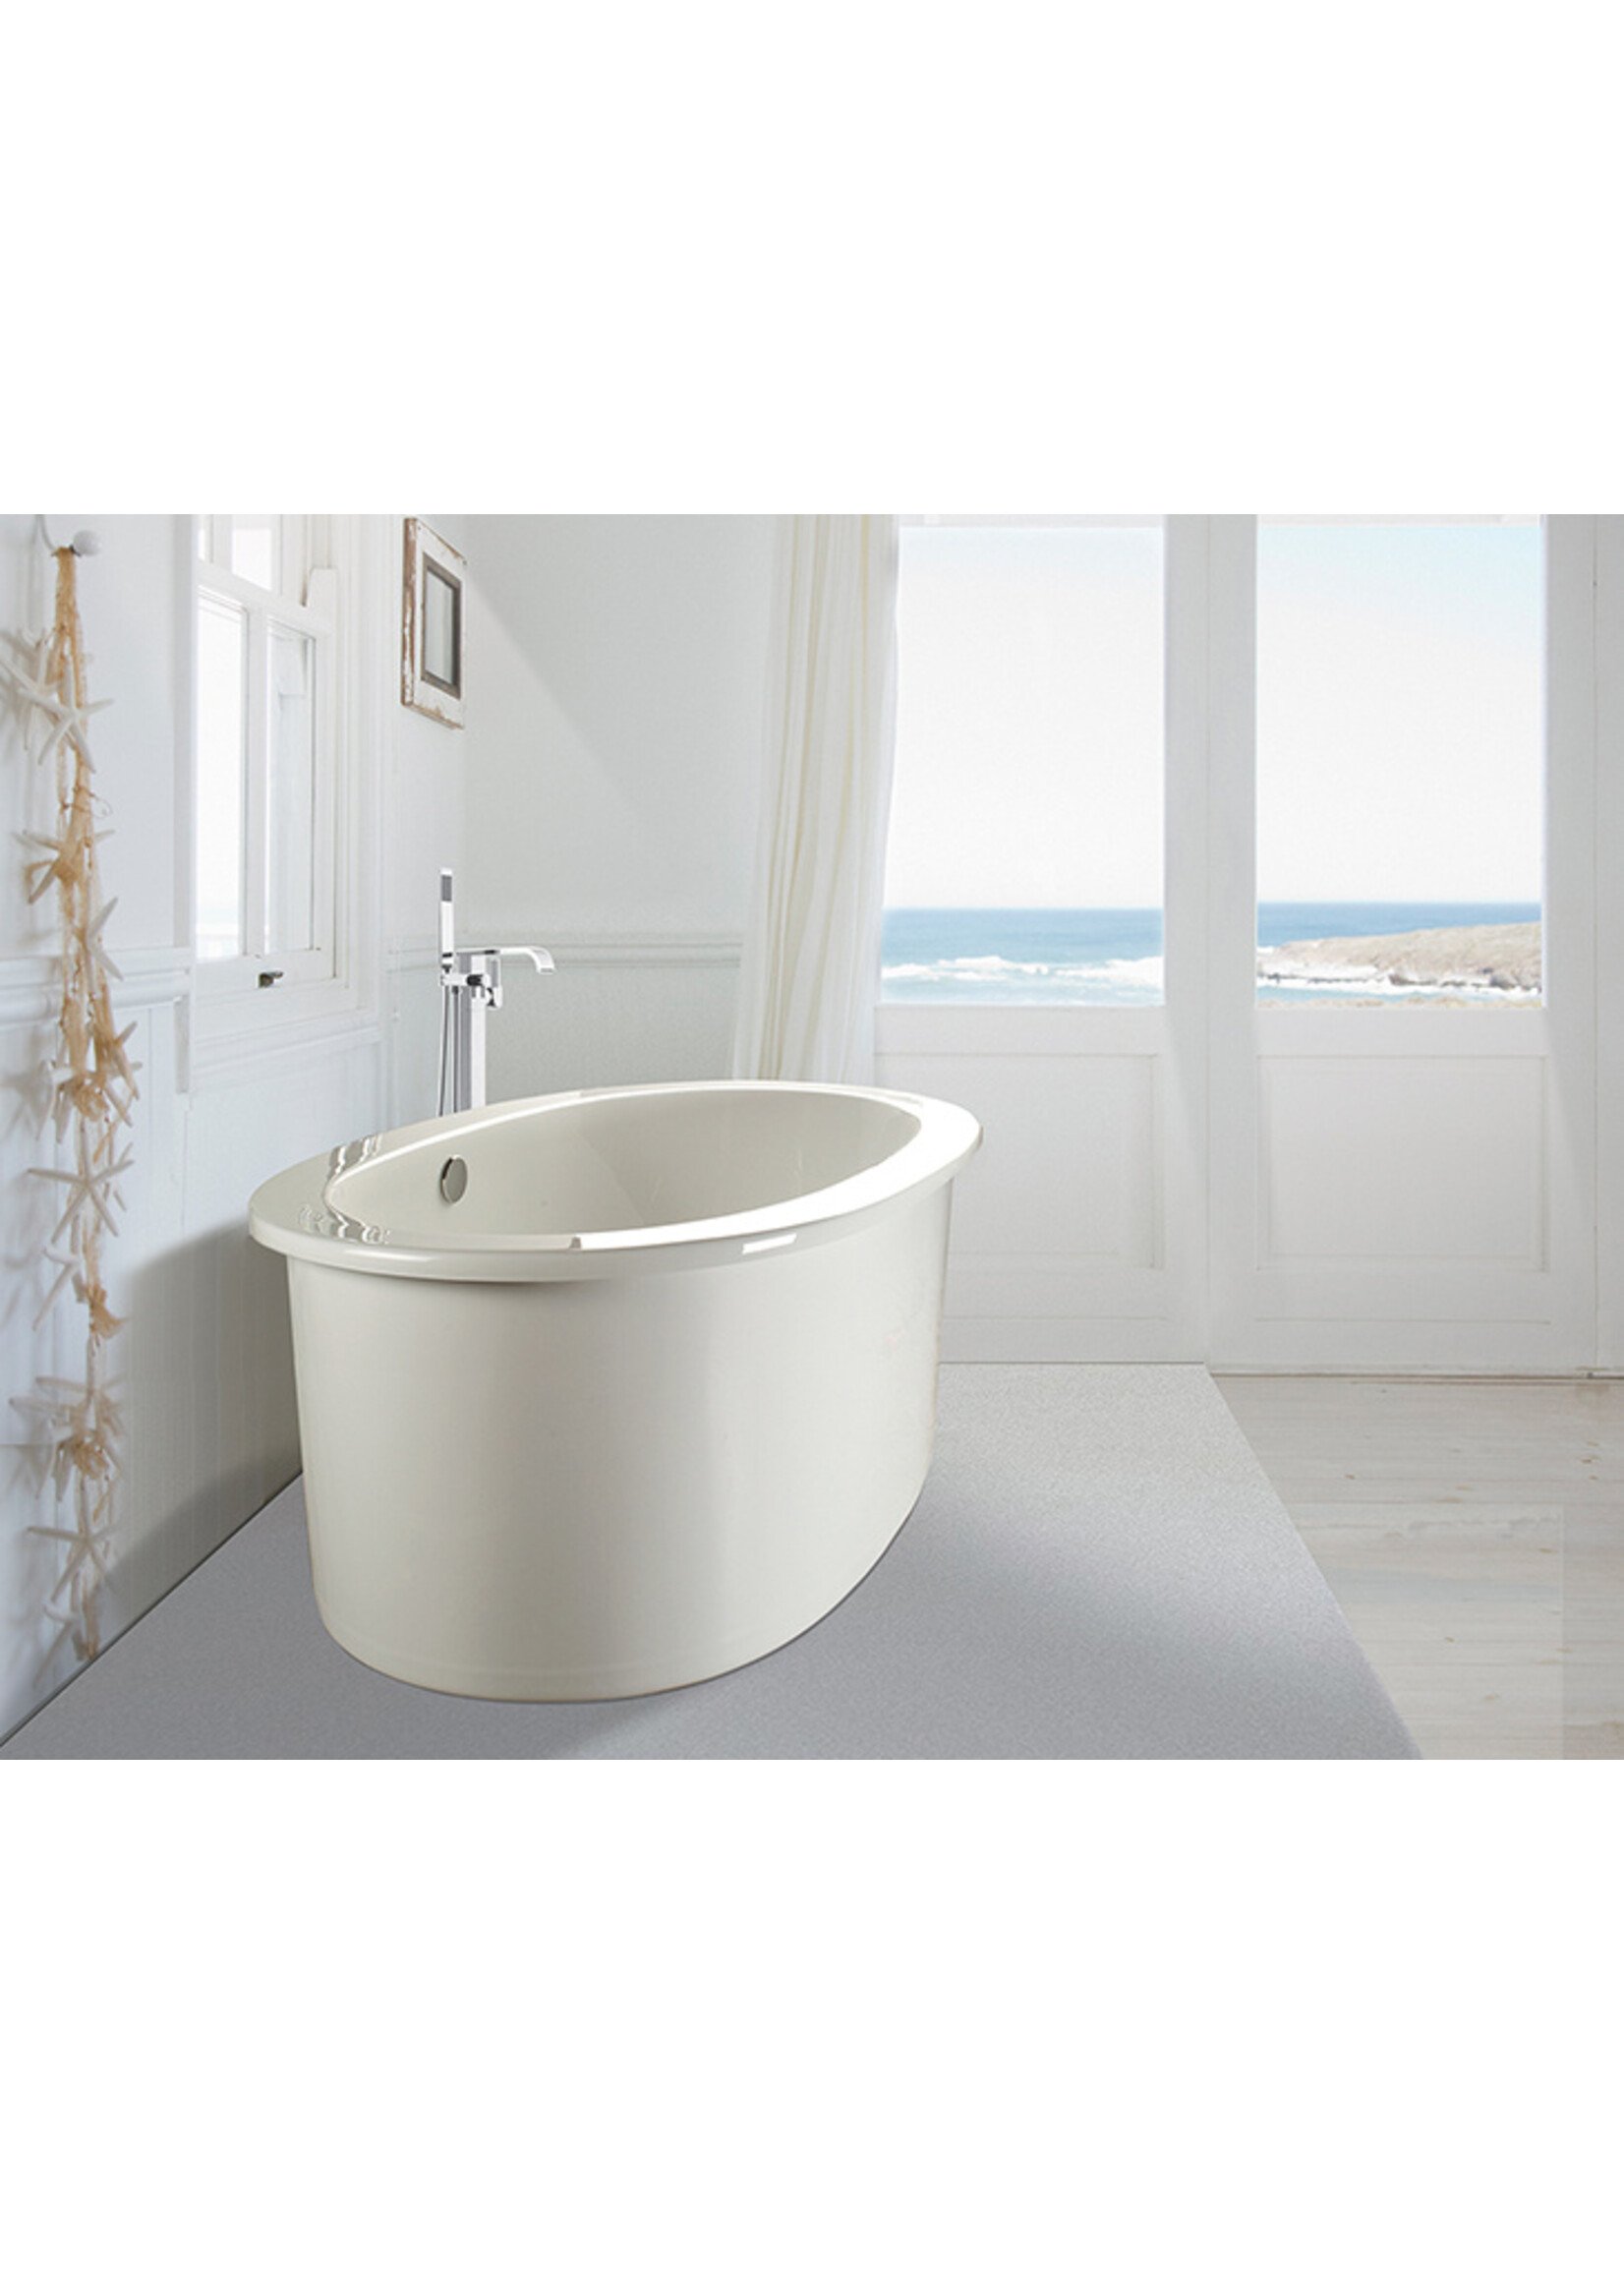 MTI Adena 7 Designer Collection Tub Acrylic 59" Freestanding Tub - White